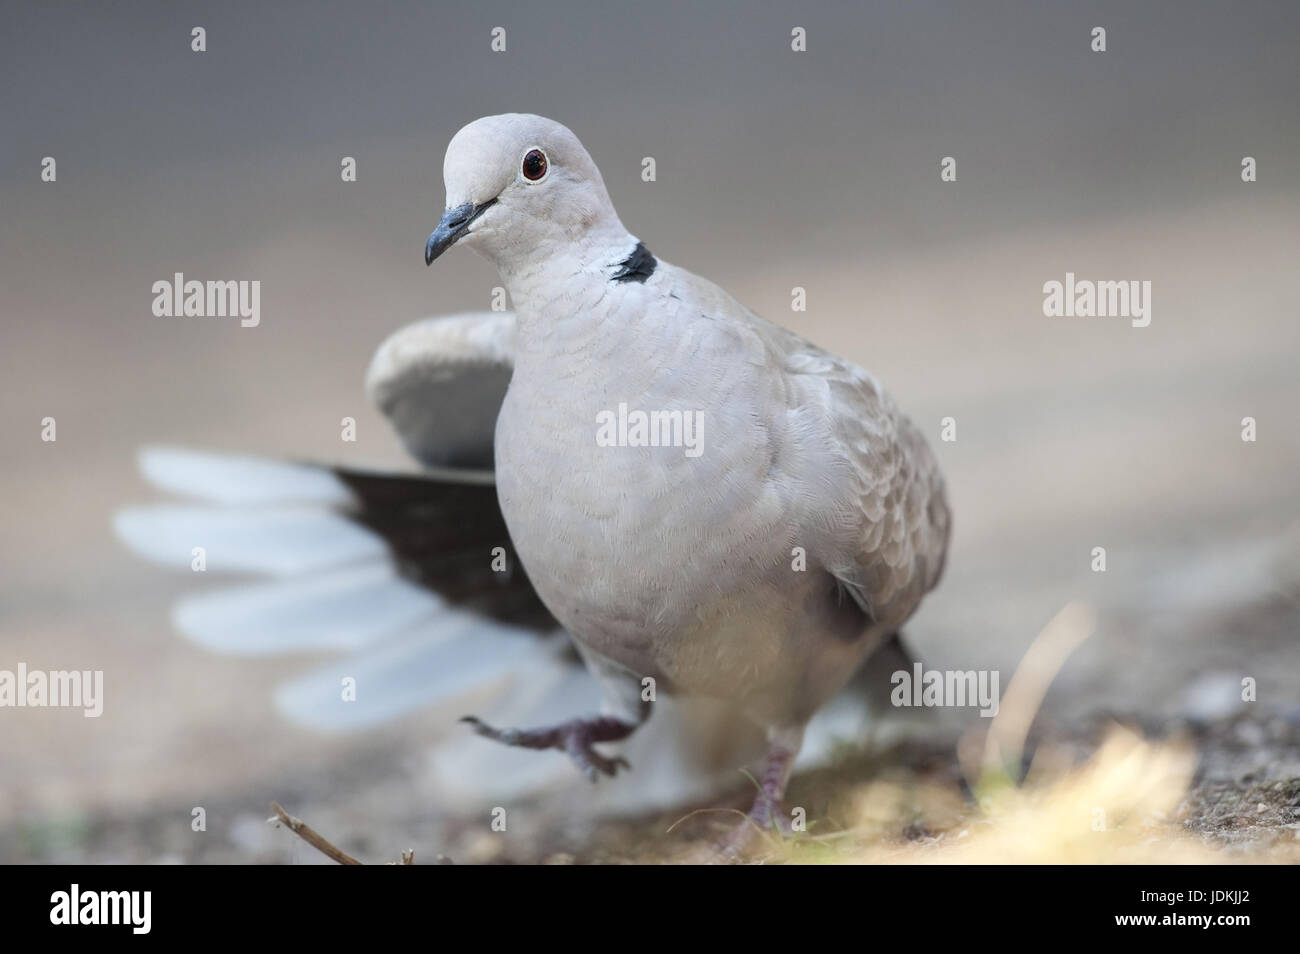 Columbidae, Columbiformes, pigeons, pigeon birds, birds Stock Photo